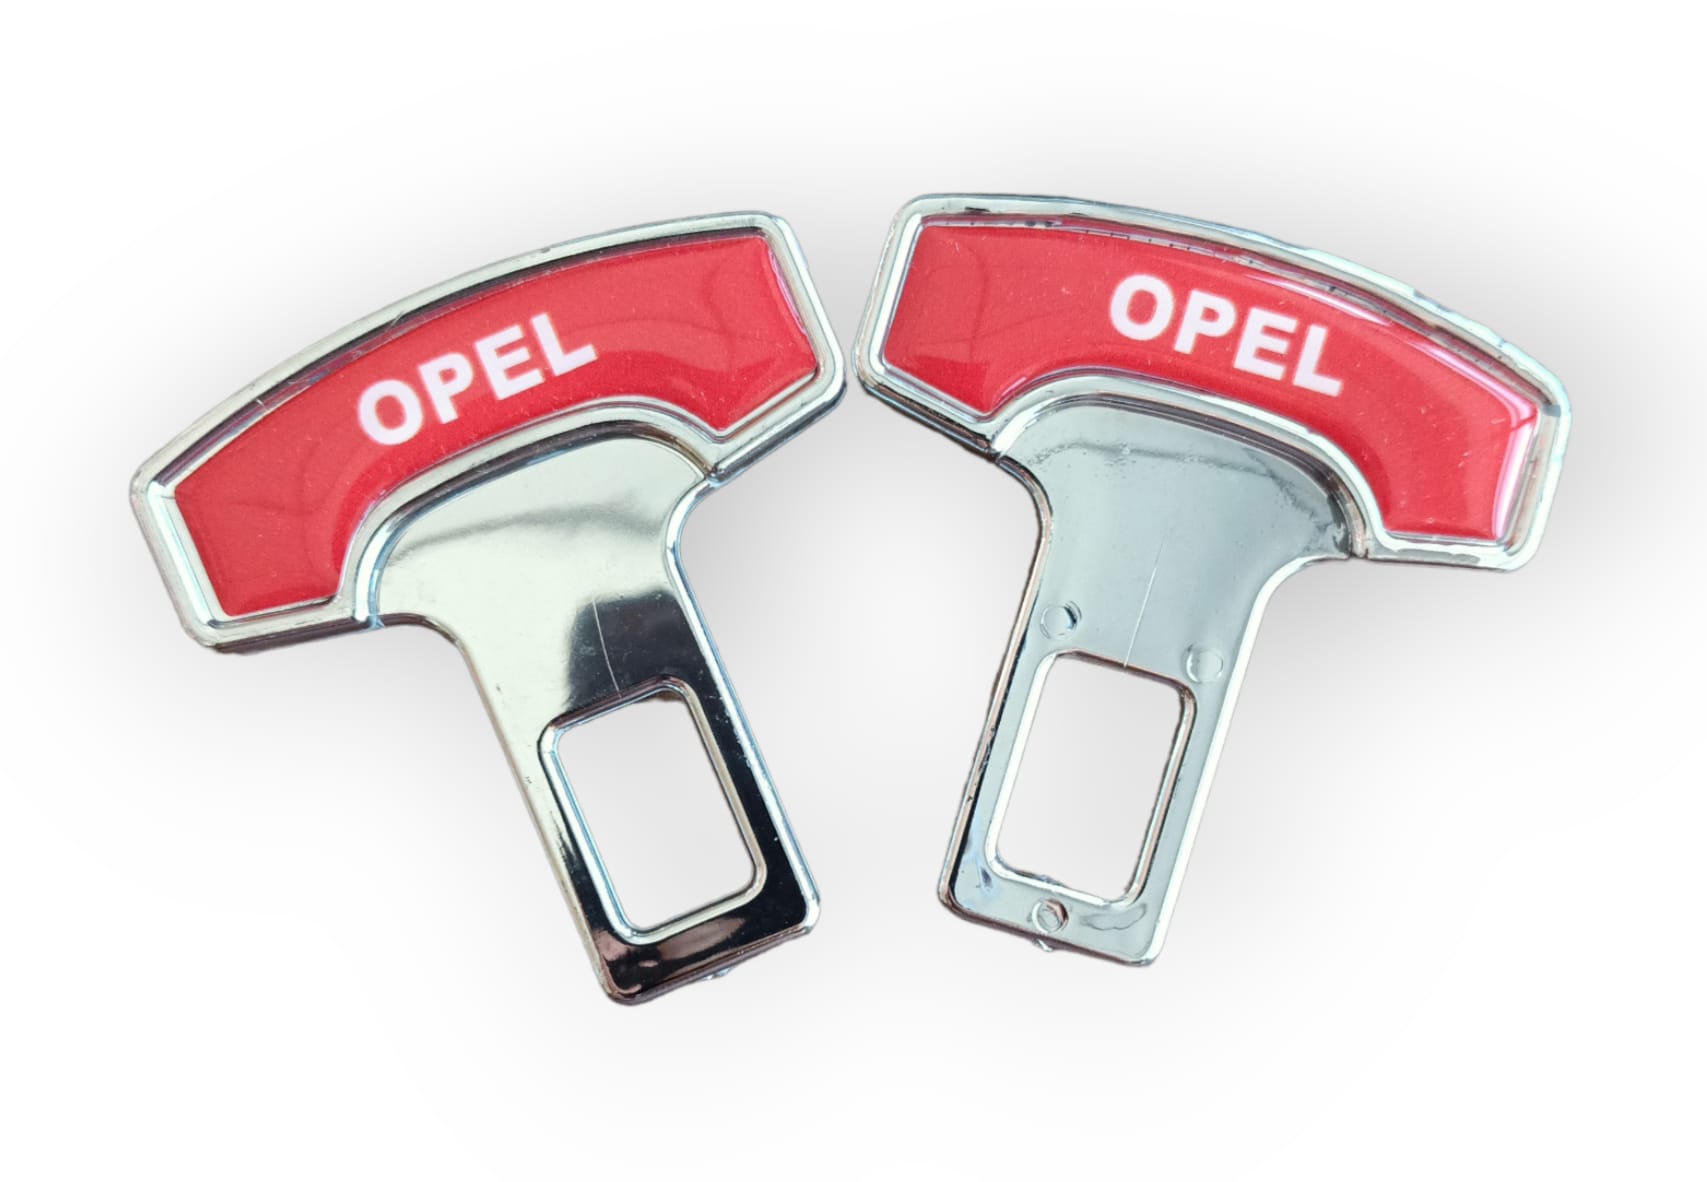 Oto Kemer Tokası Opel Logolu 2 Adet